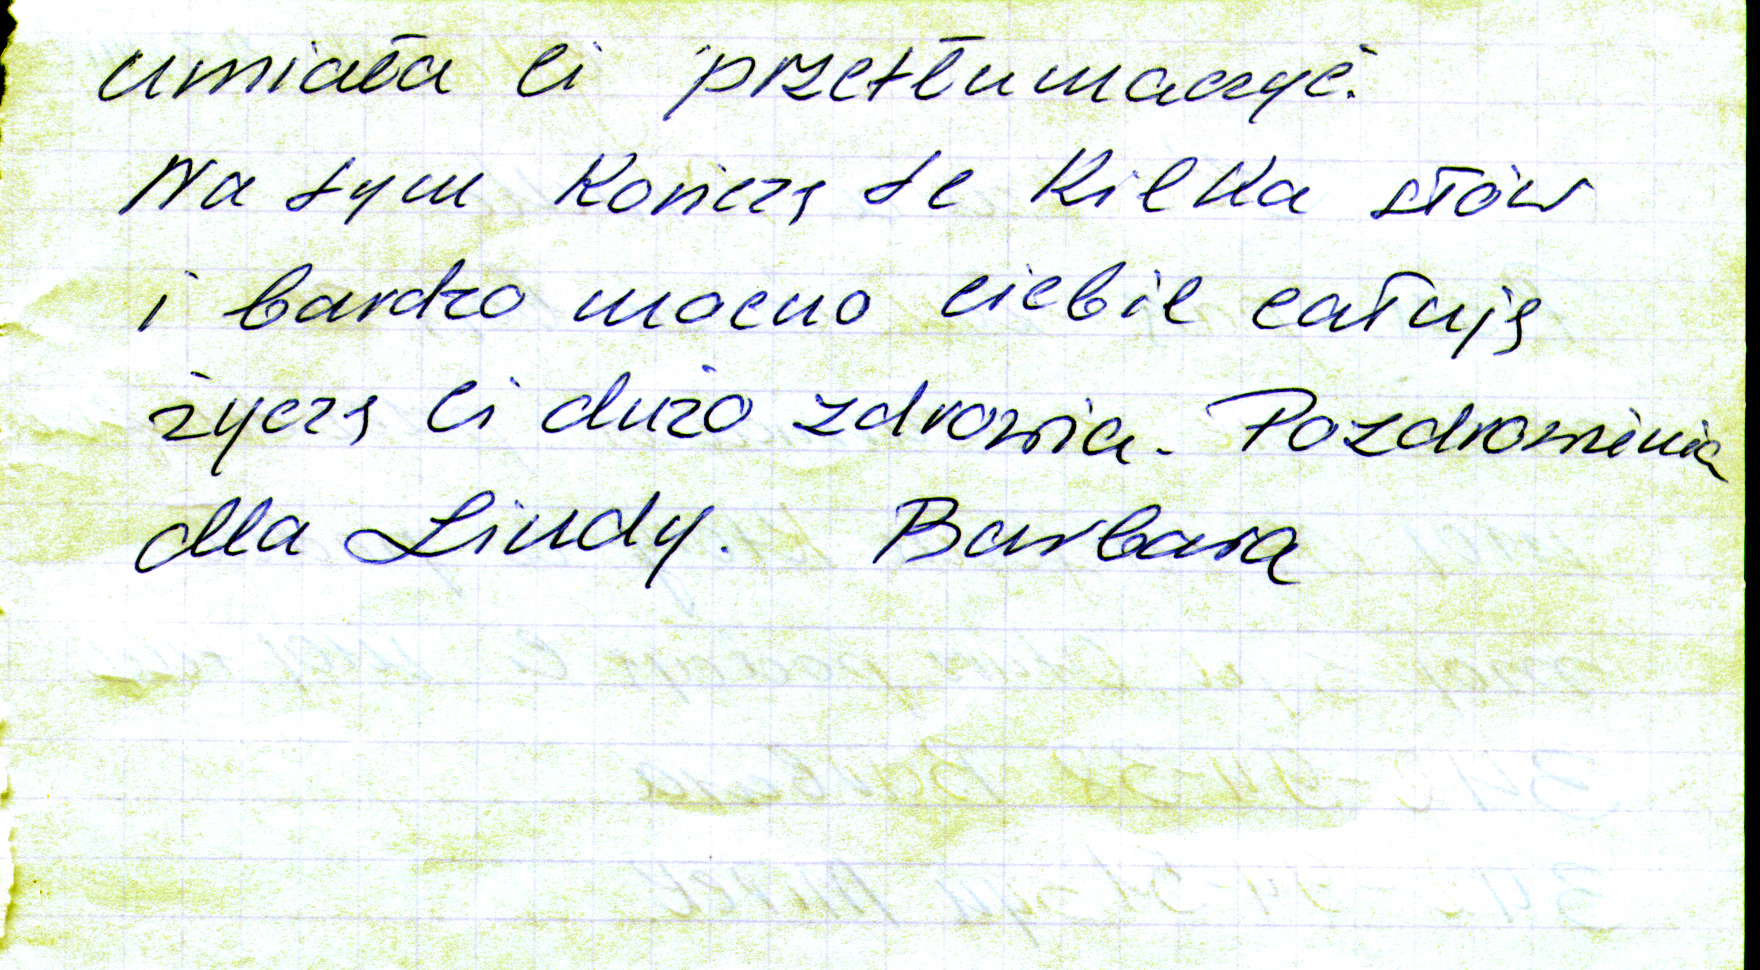 Barbara Kiszczak - Letter from Poland _back_ 2000.jpg